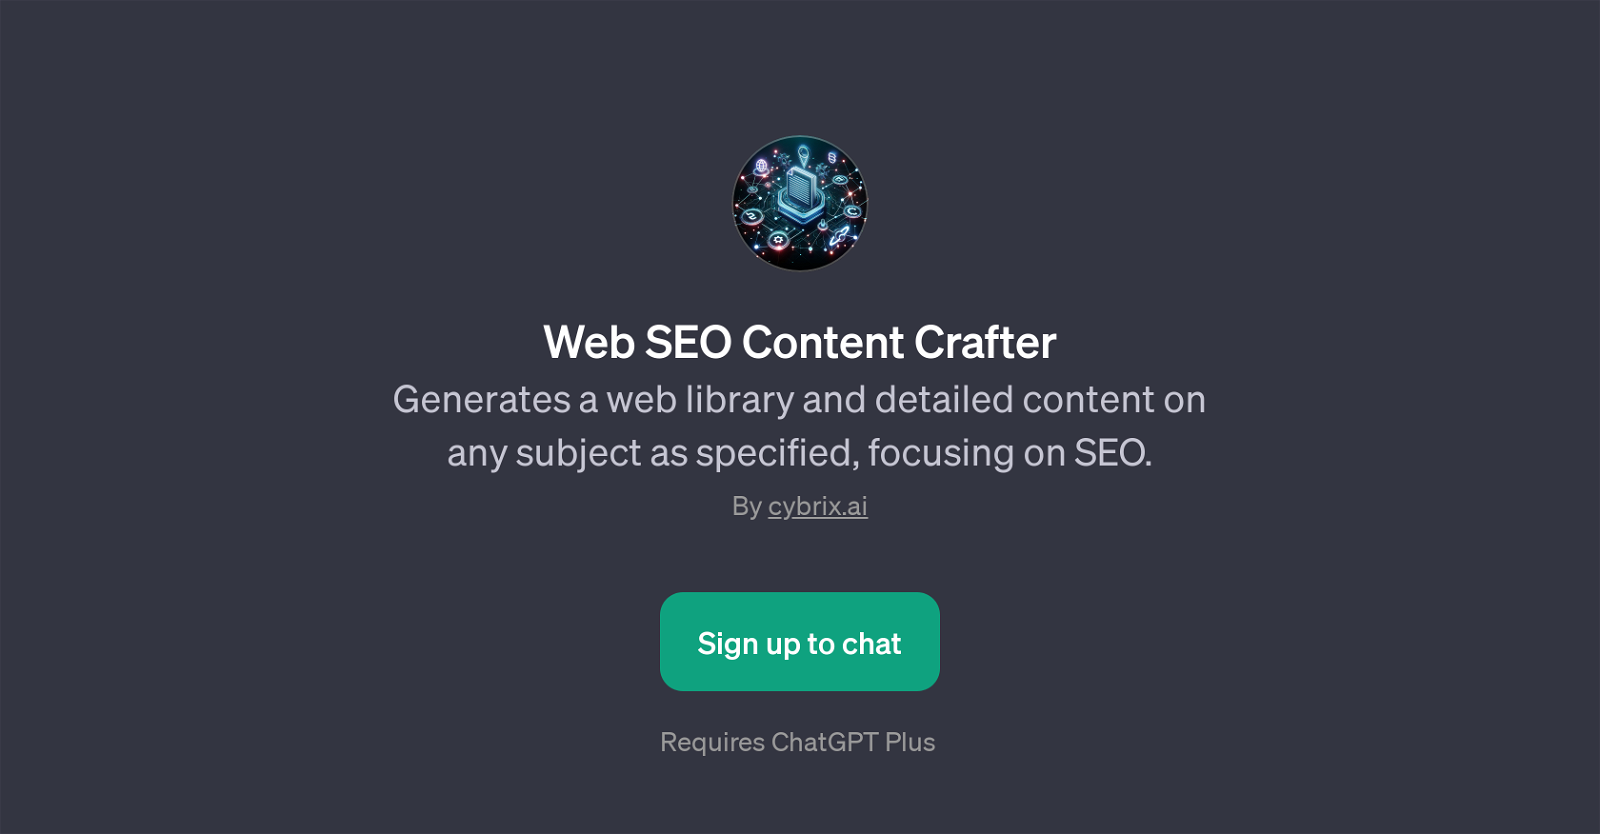 Web SEO Content Crafter website